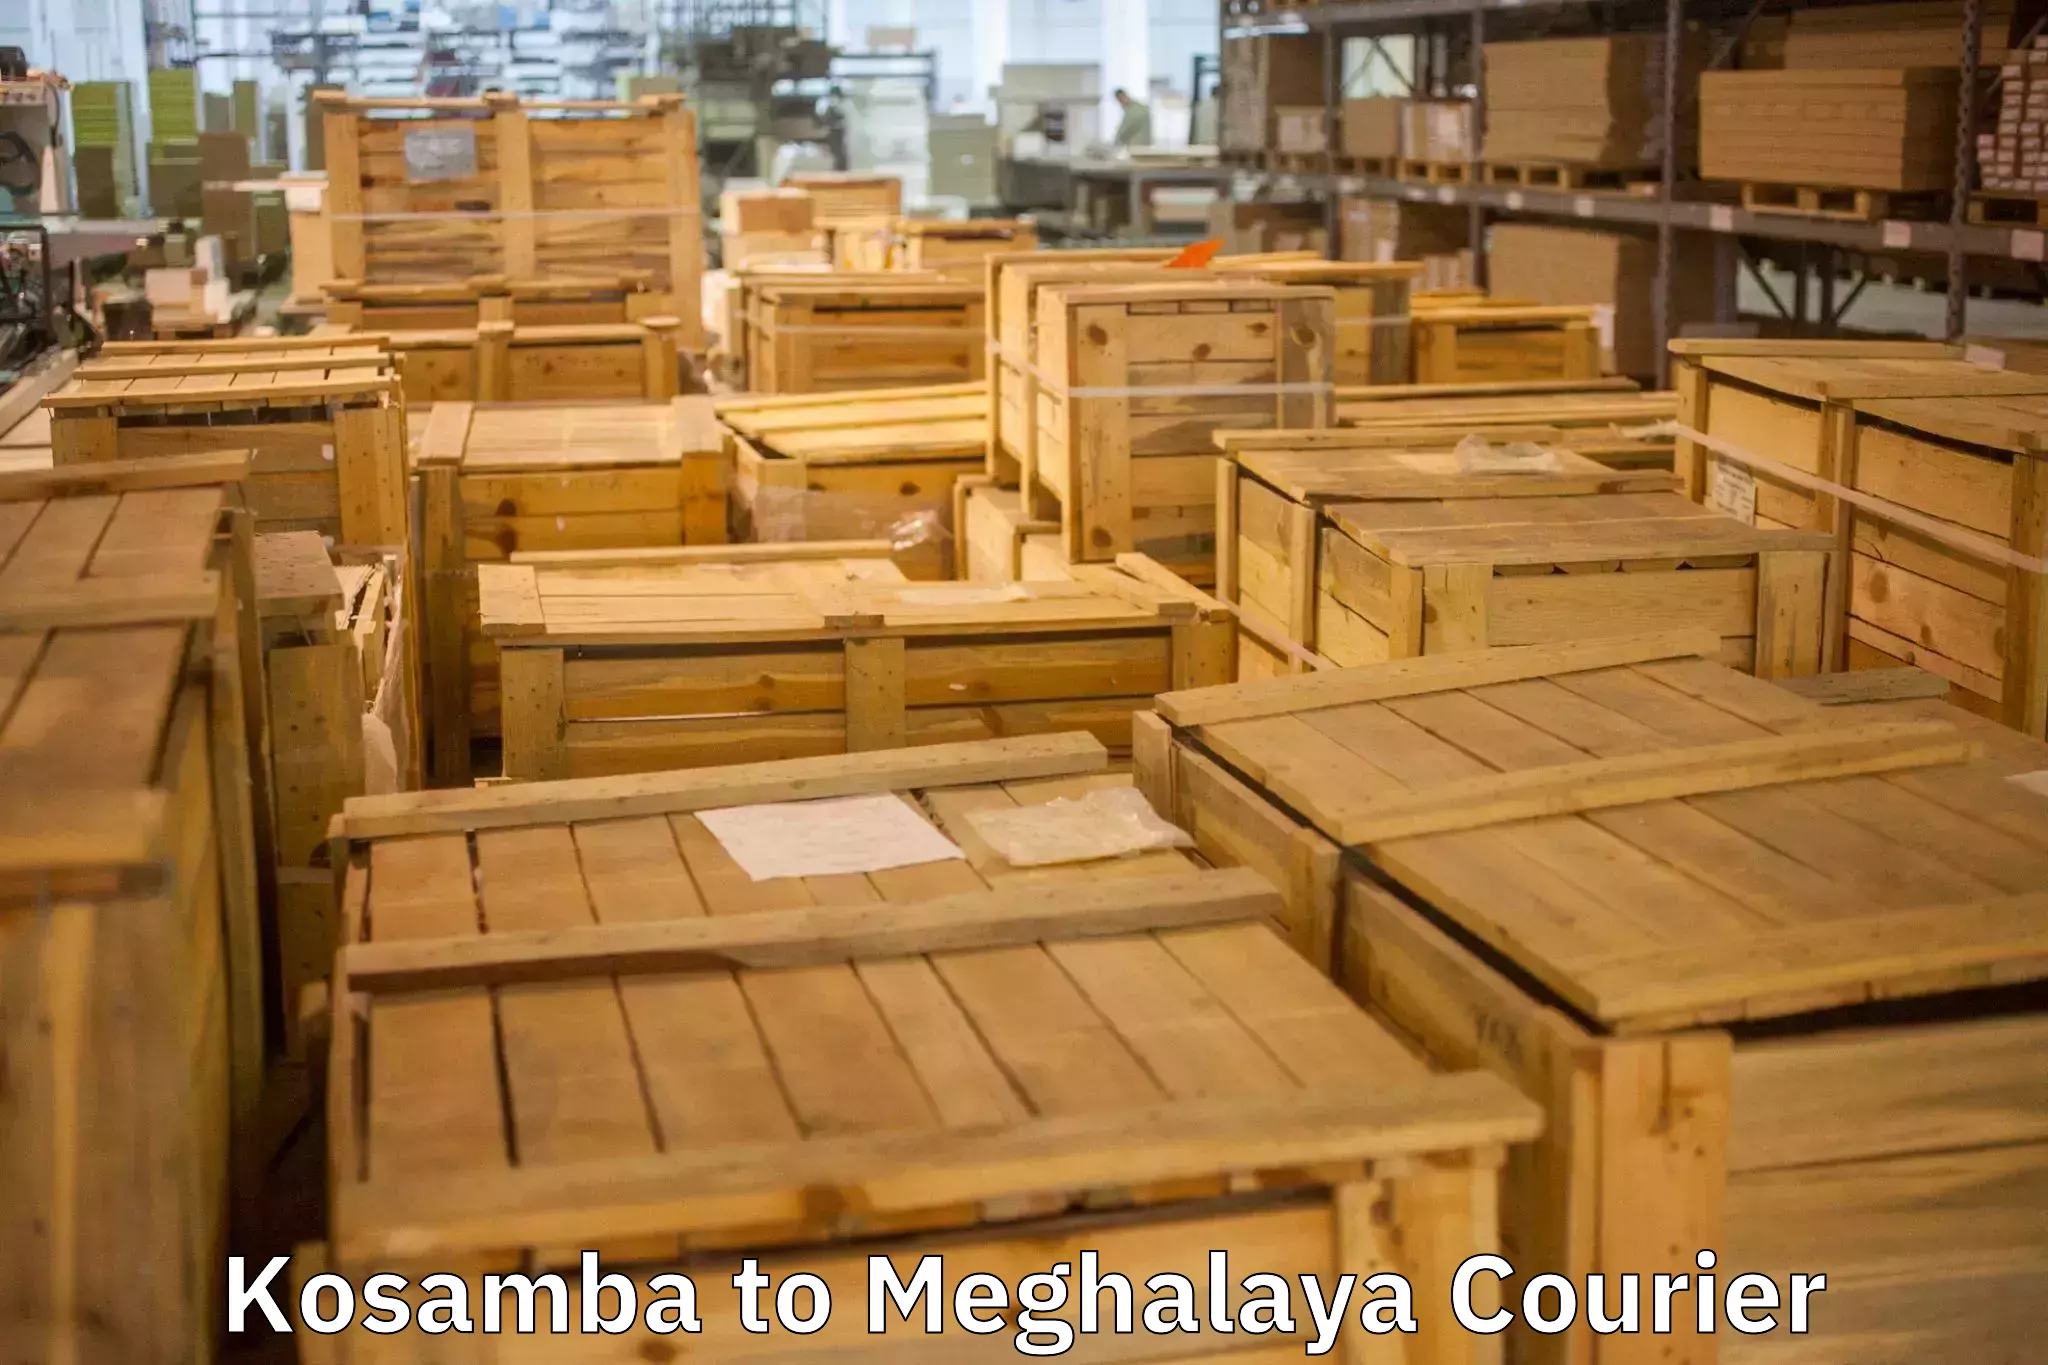 Trusted relocation experts Kosamba to Meghalaya